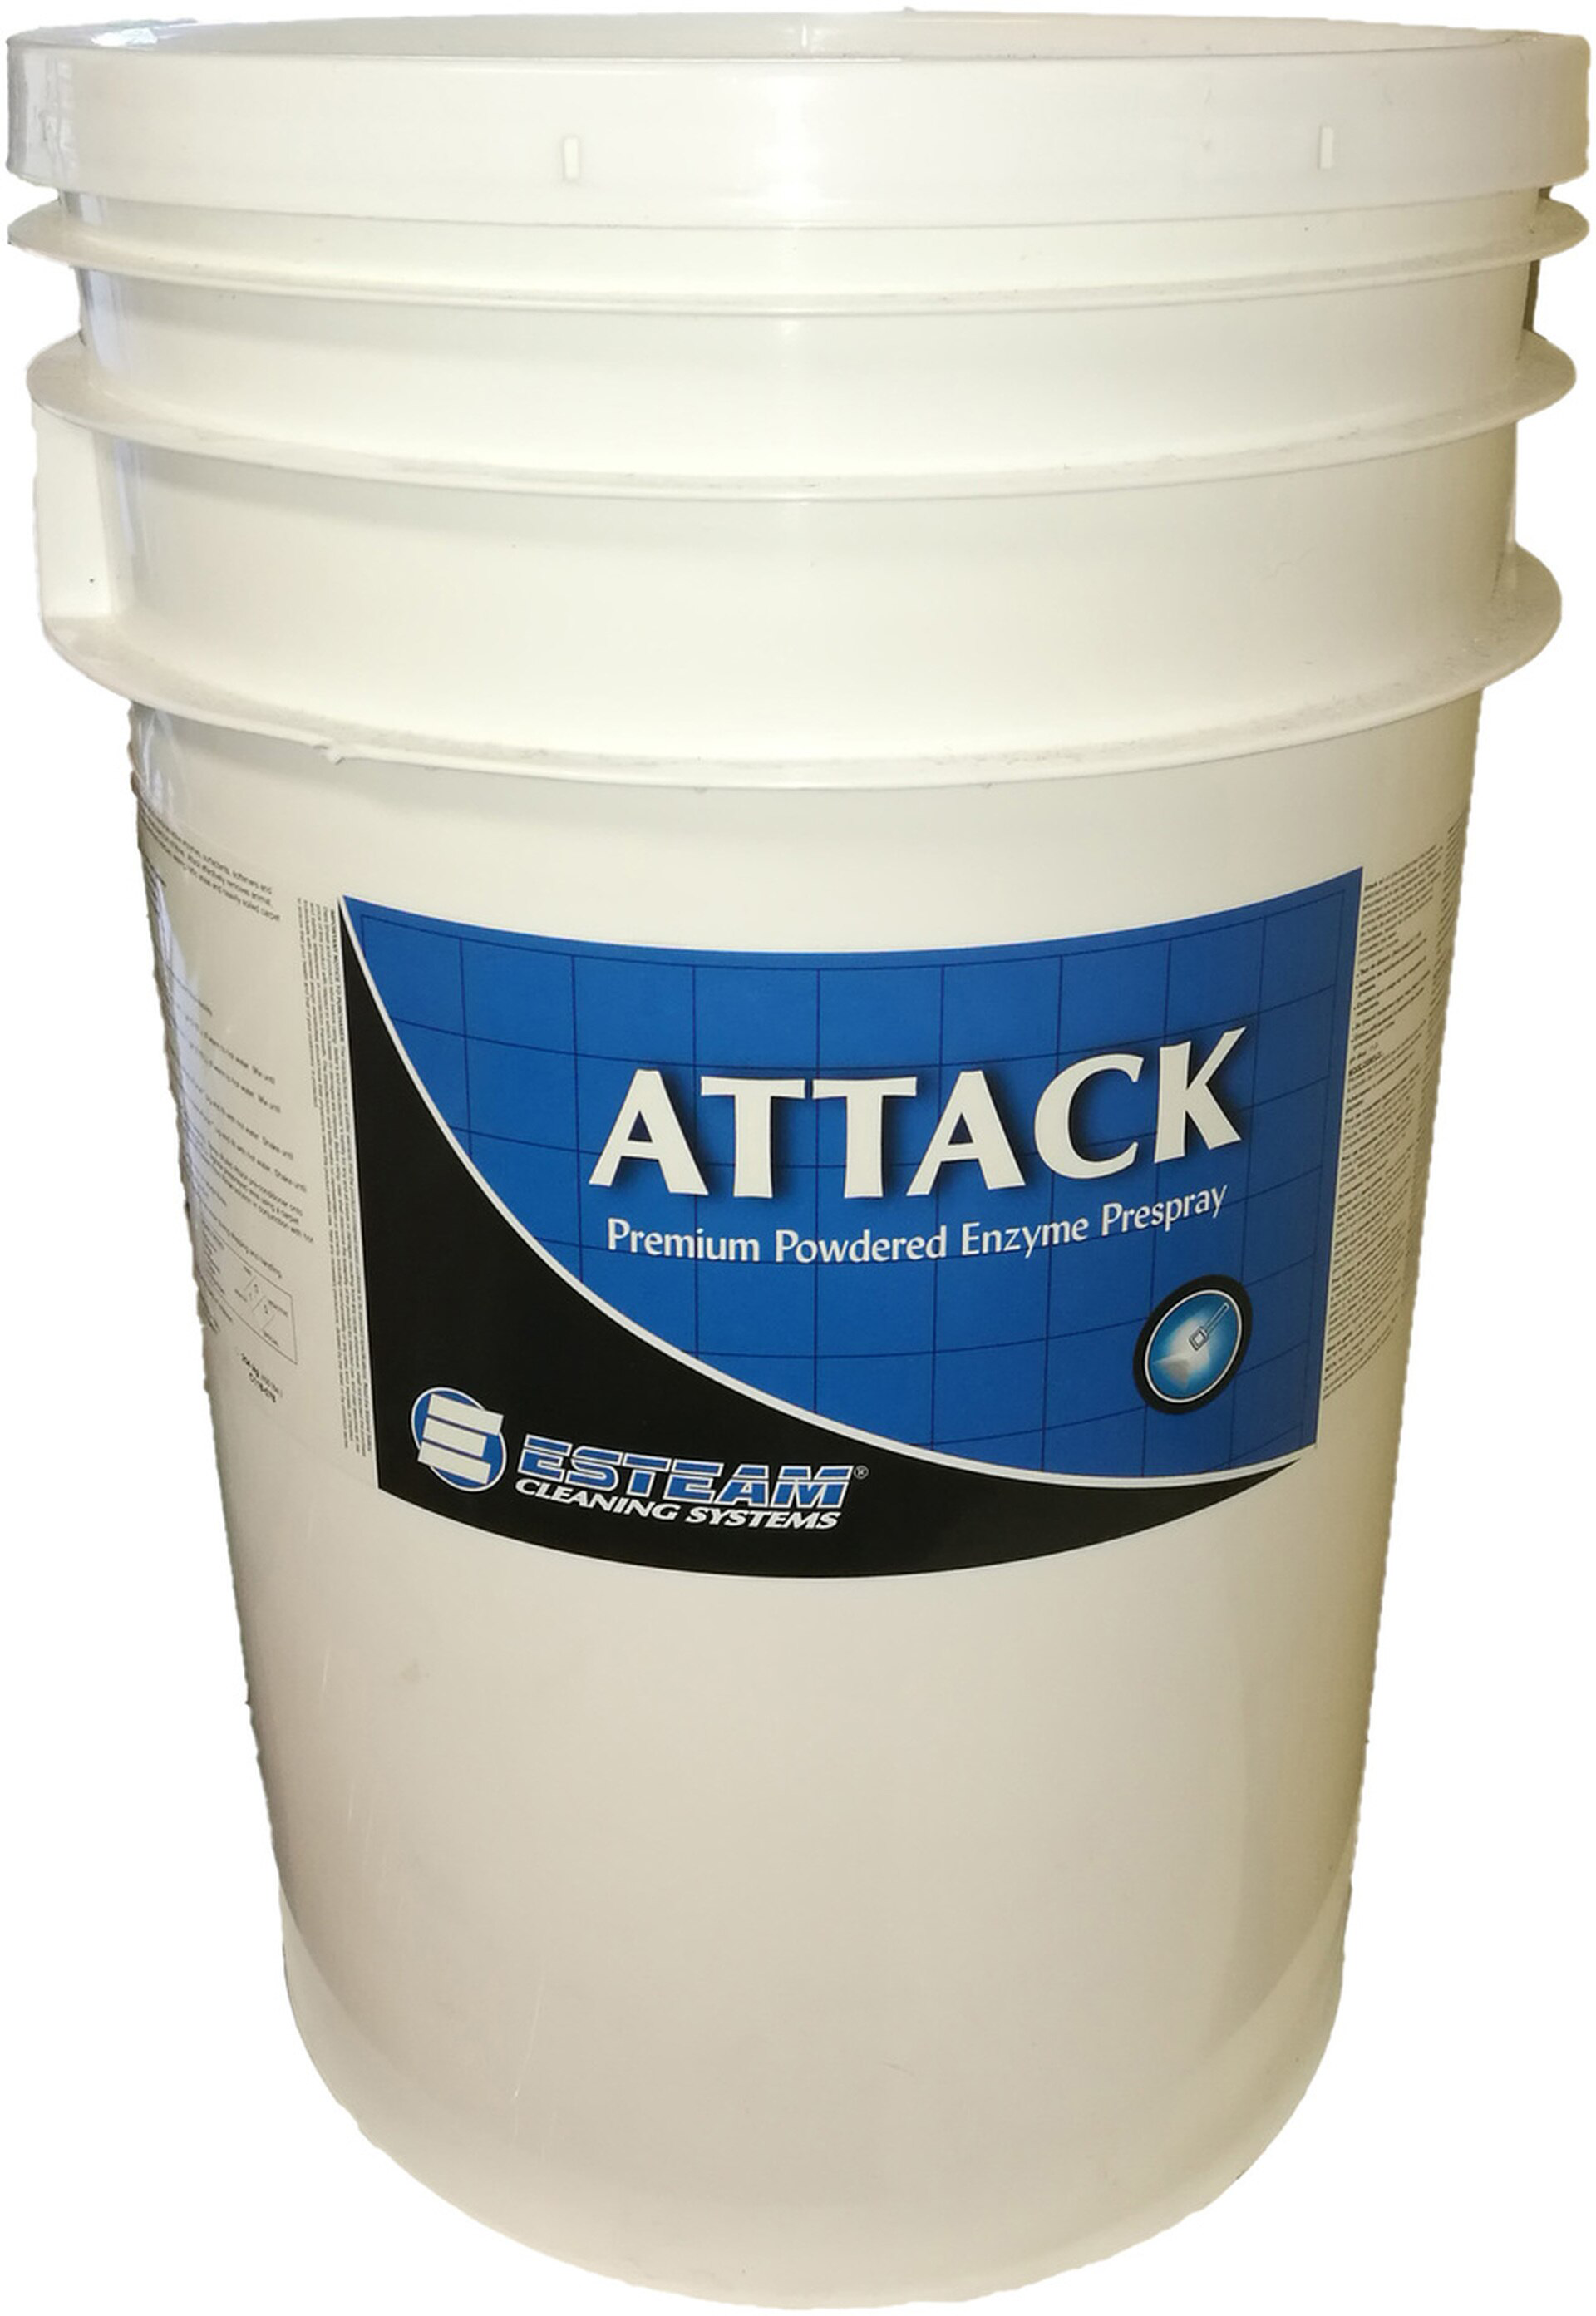 50lb Esteam® Attack™ Premium Powdered Enzyme Prespray, Concentrate